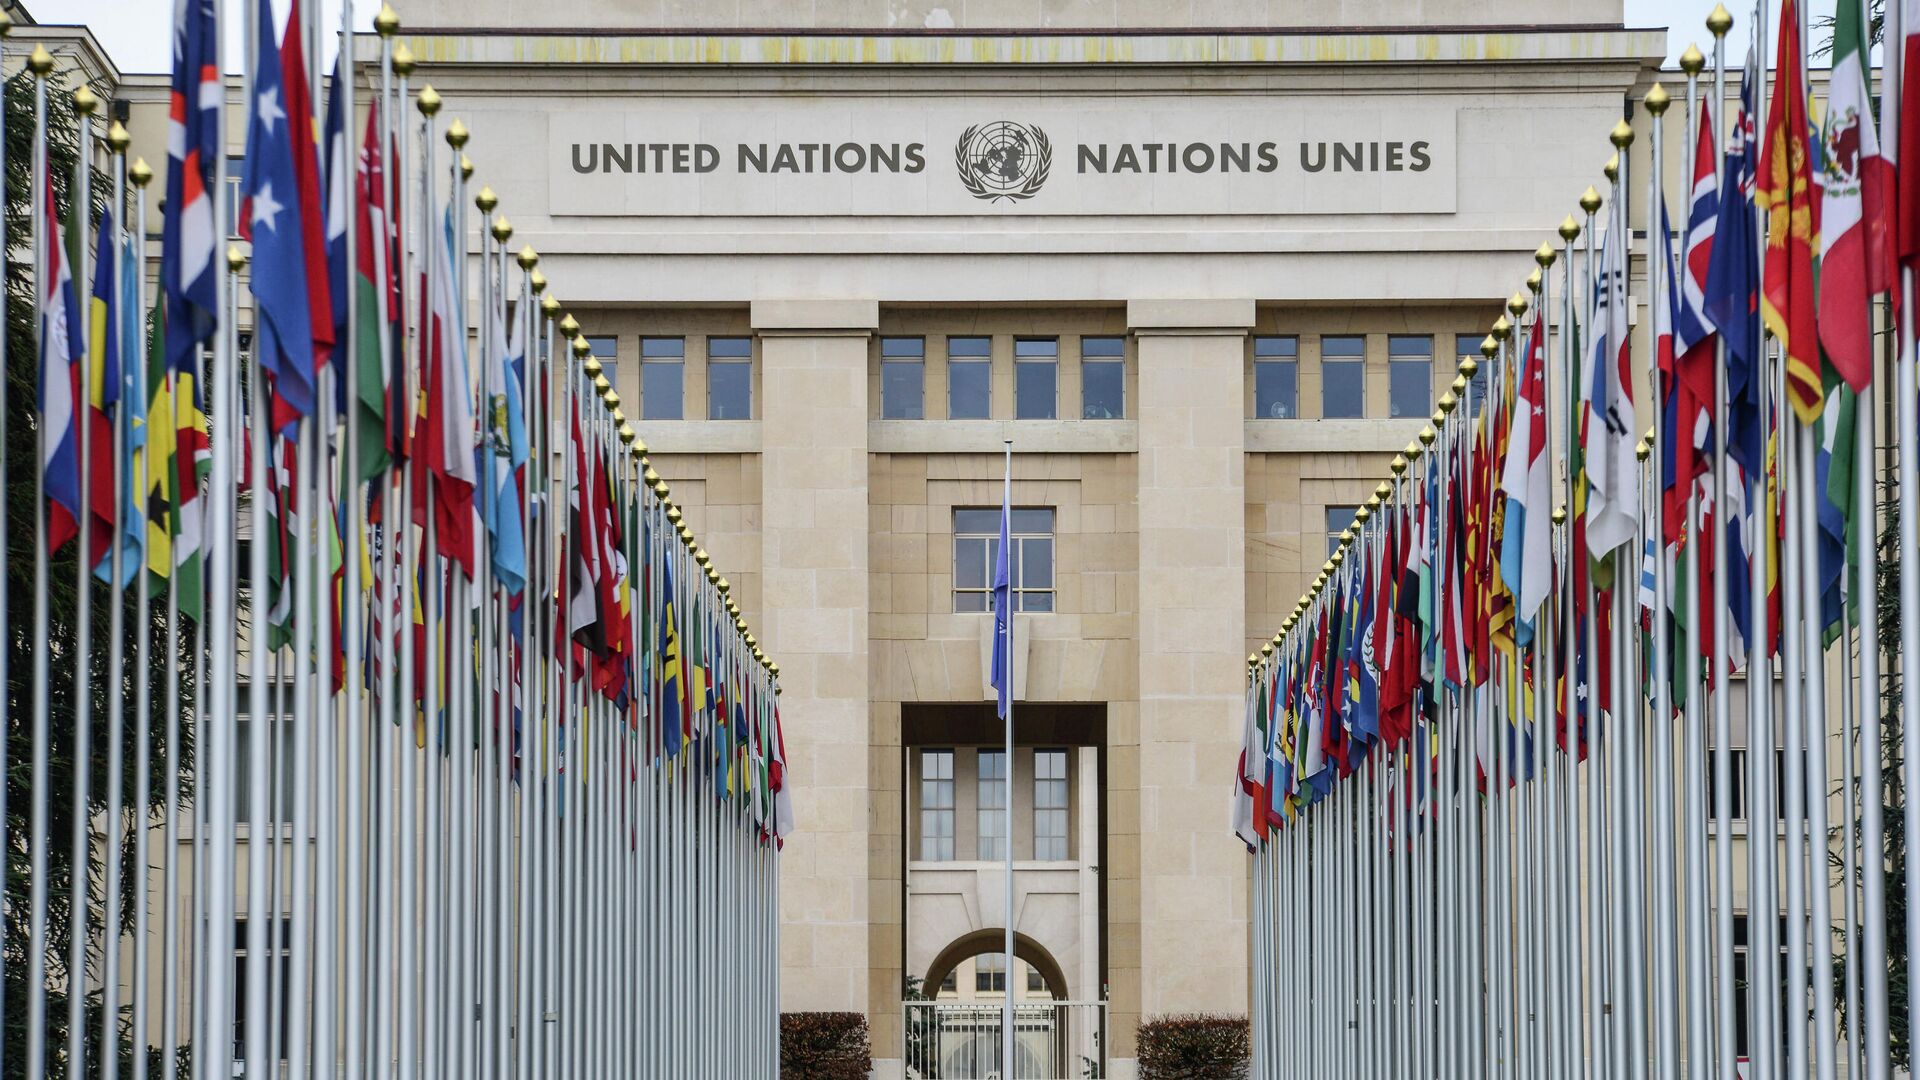 Аллея флагов возле здания ООН в Женеве - РИА Новости, 1920, 14.08.2020